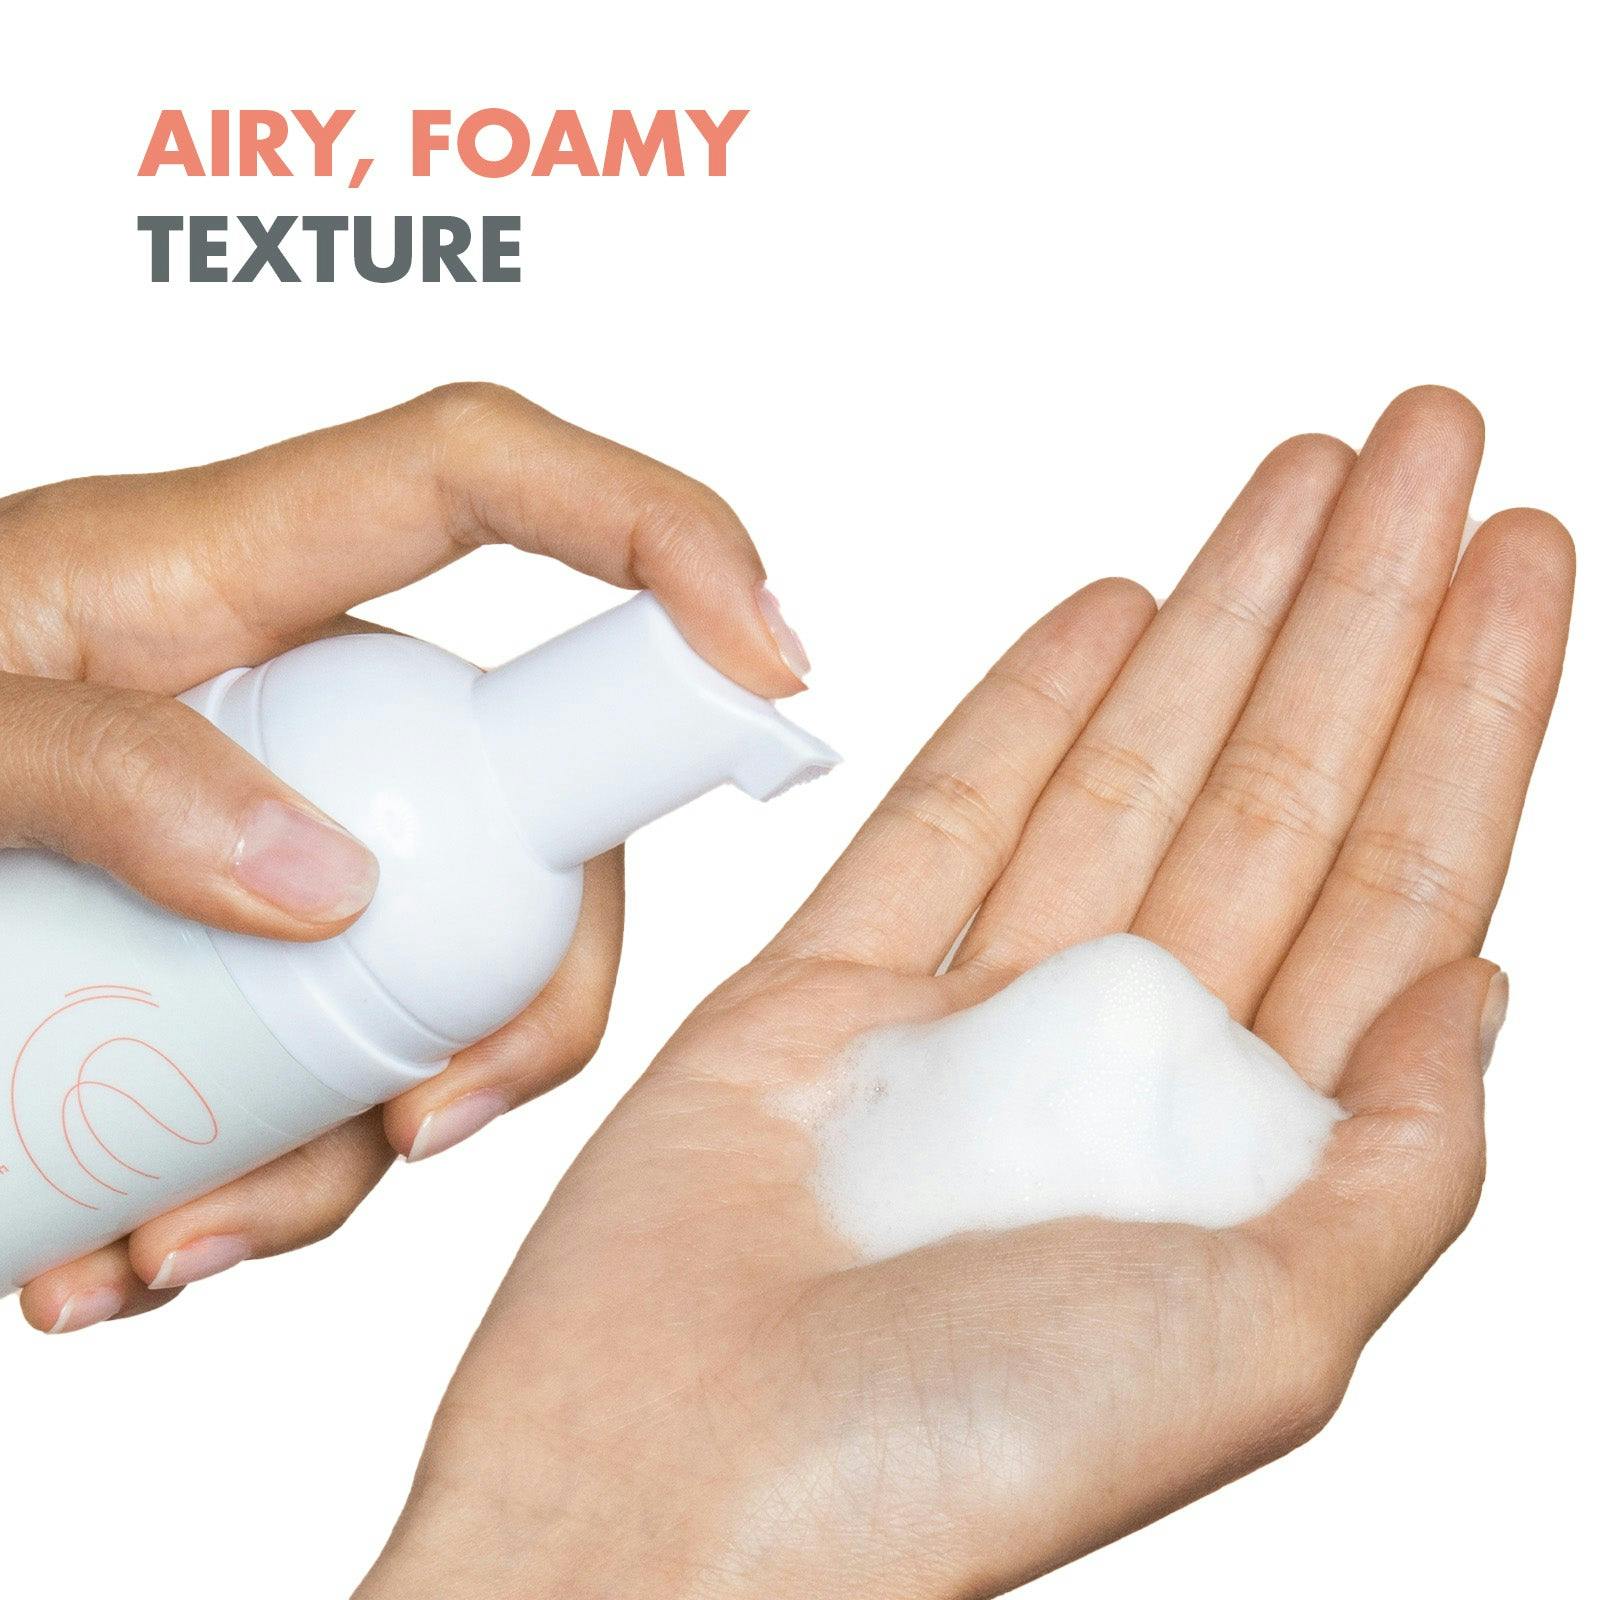 Avène Cleansing Foam 150ml - Cleanser for Sensitive Skin